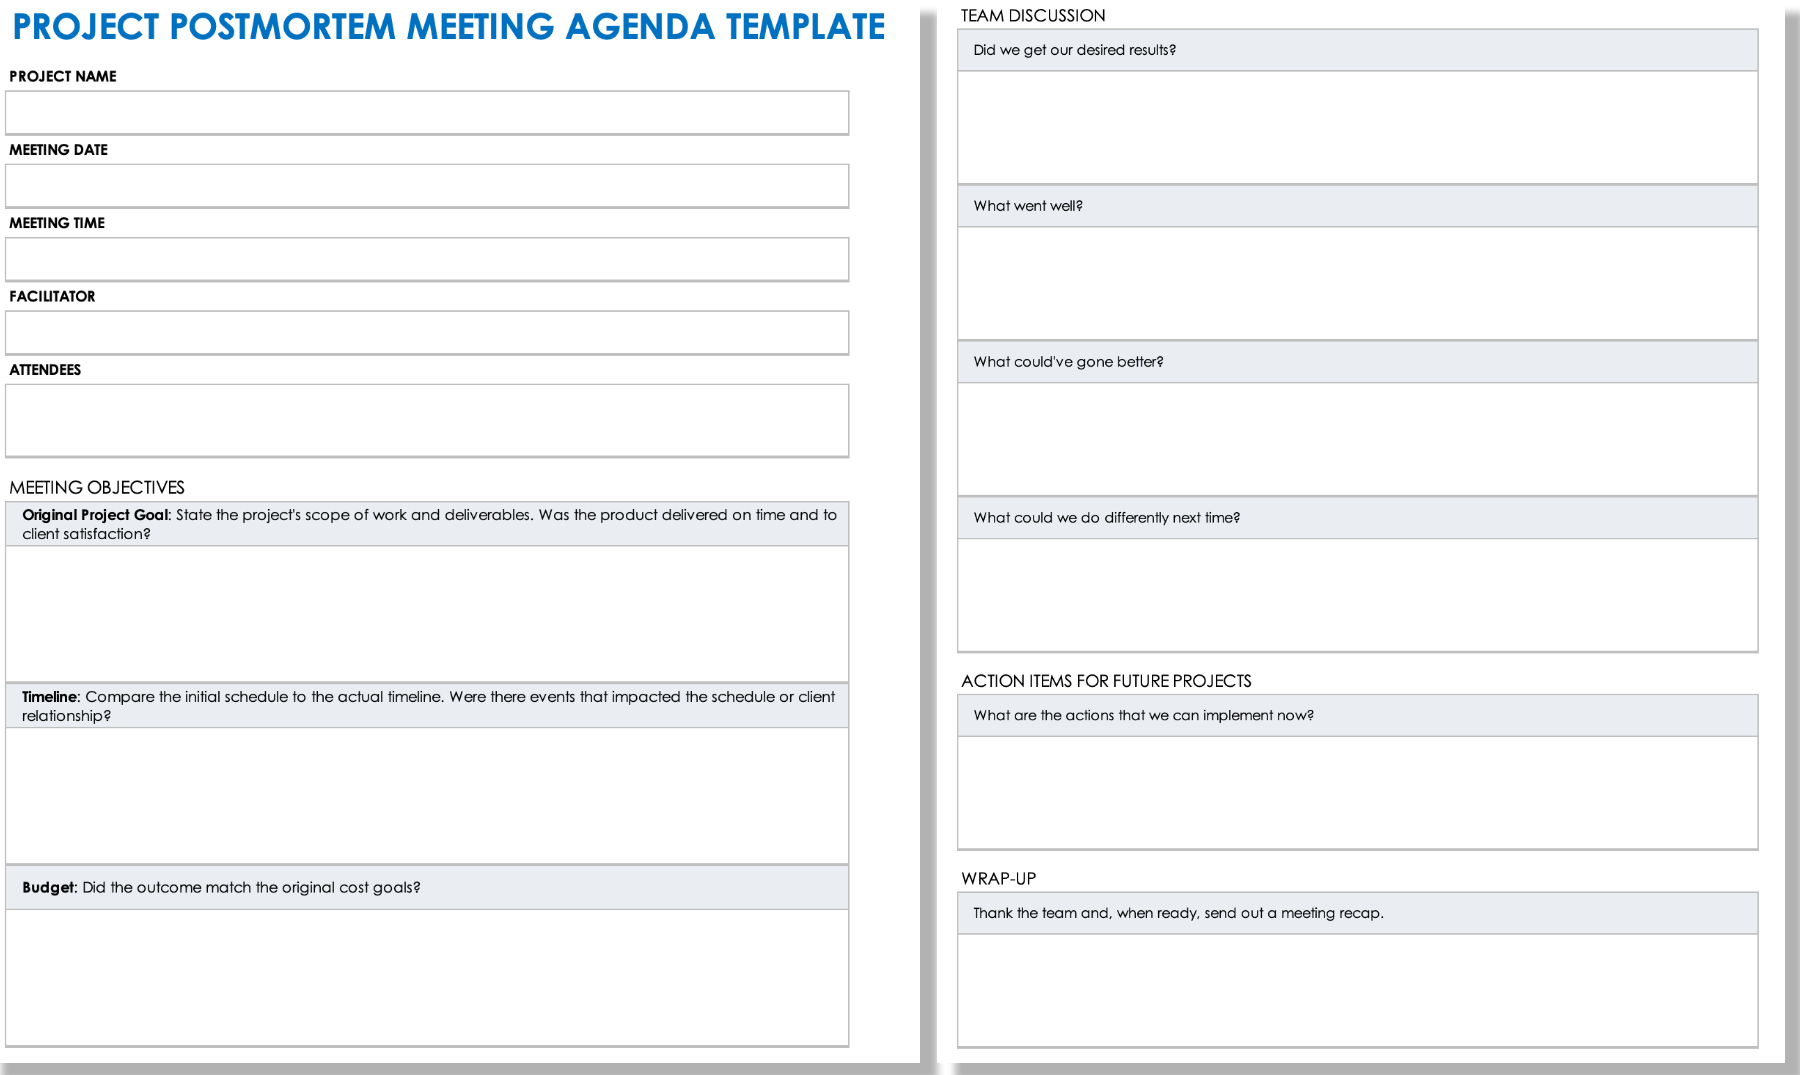 Project Post-Mortem Meeting Agenda Template